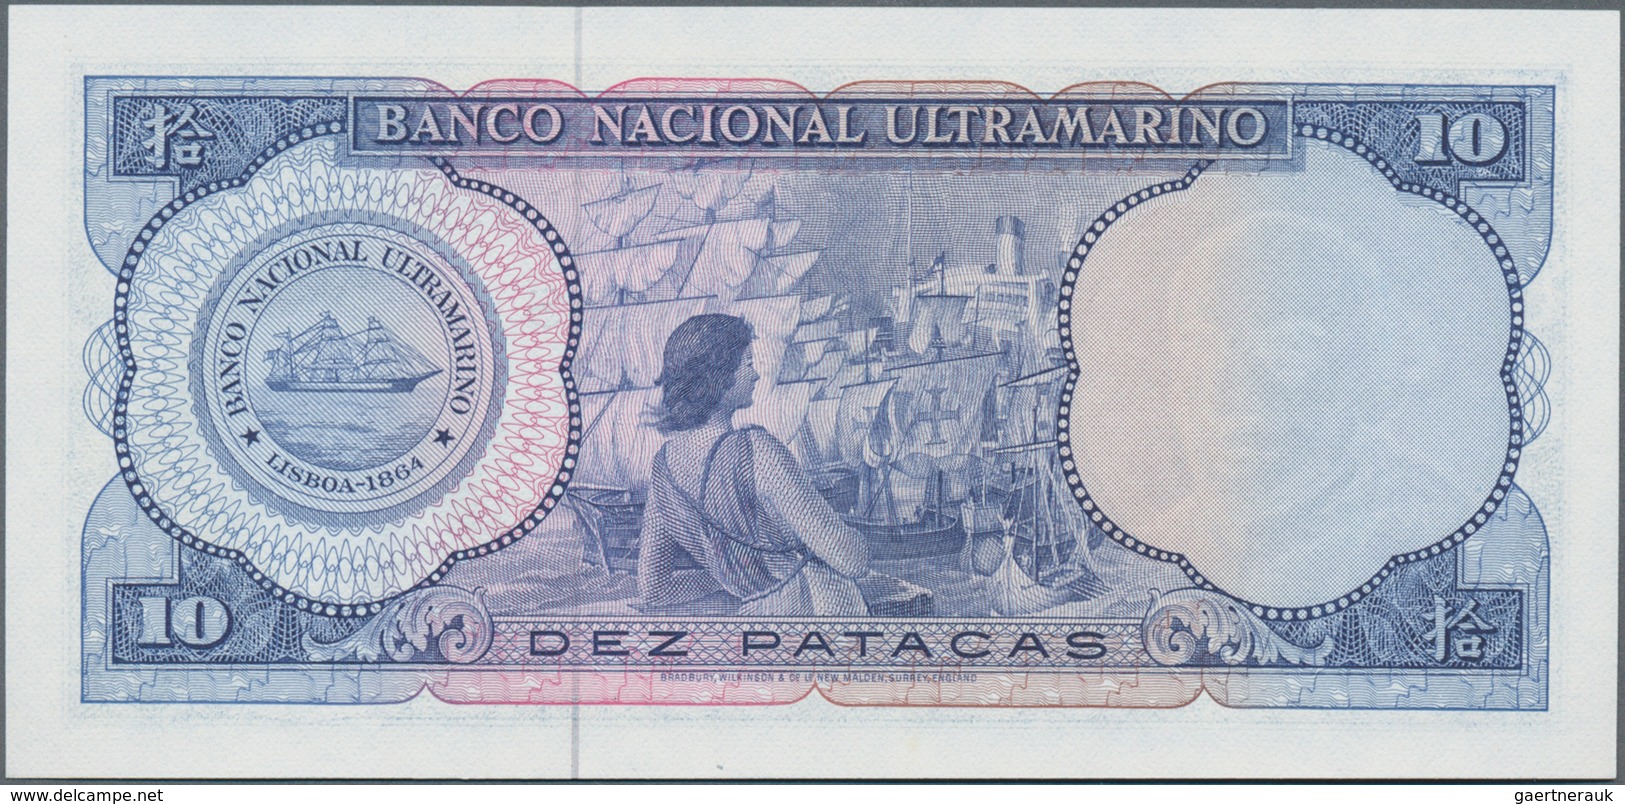 Macau / Macao: Banco Nacional Ultramarino 10 Patacas 1977, P.55a In Perfect UNC Condition. - Macao